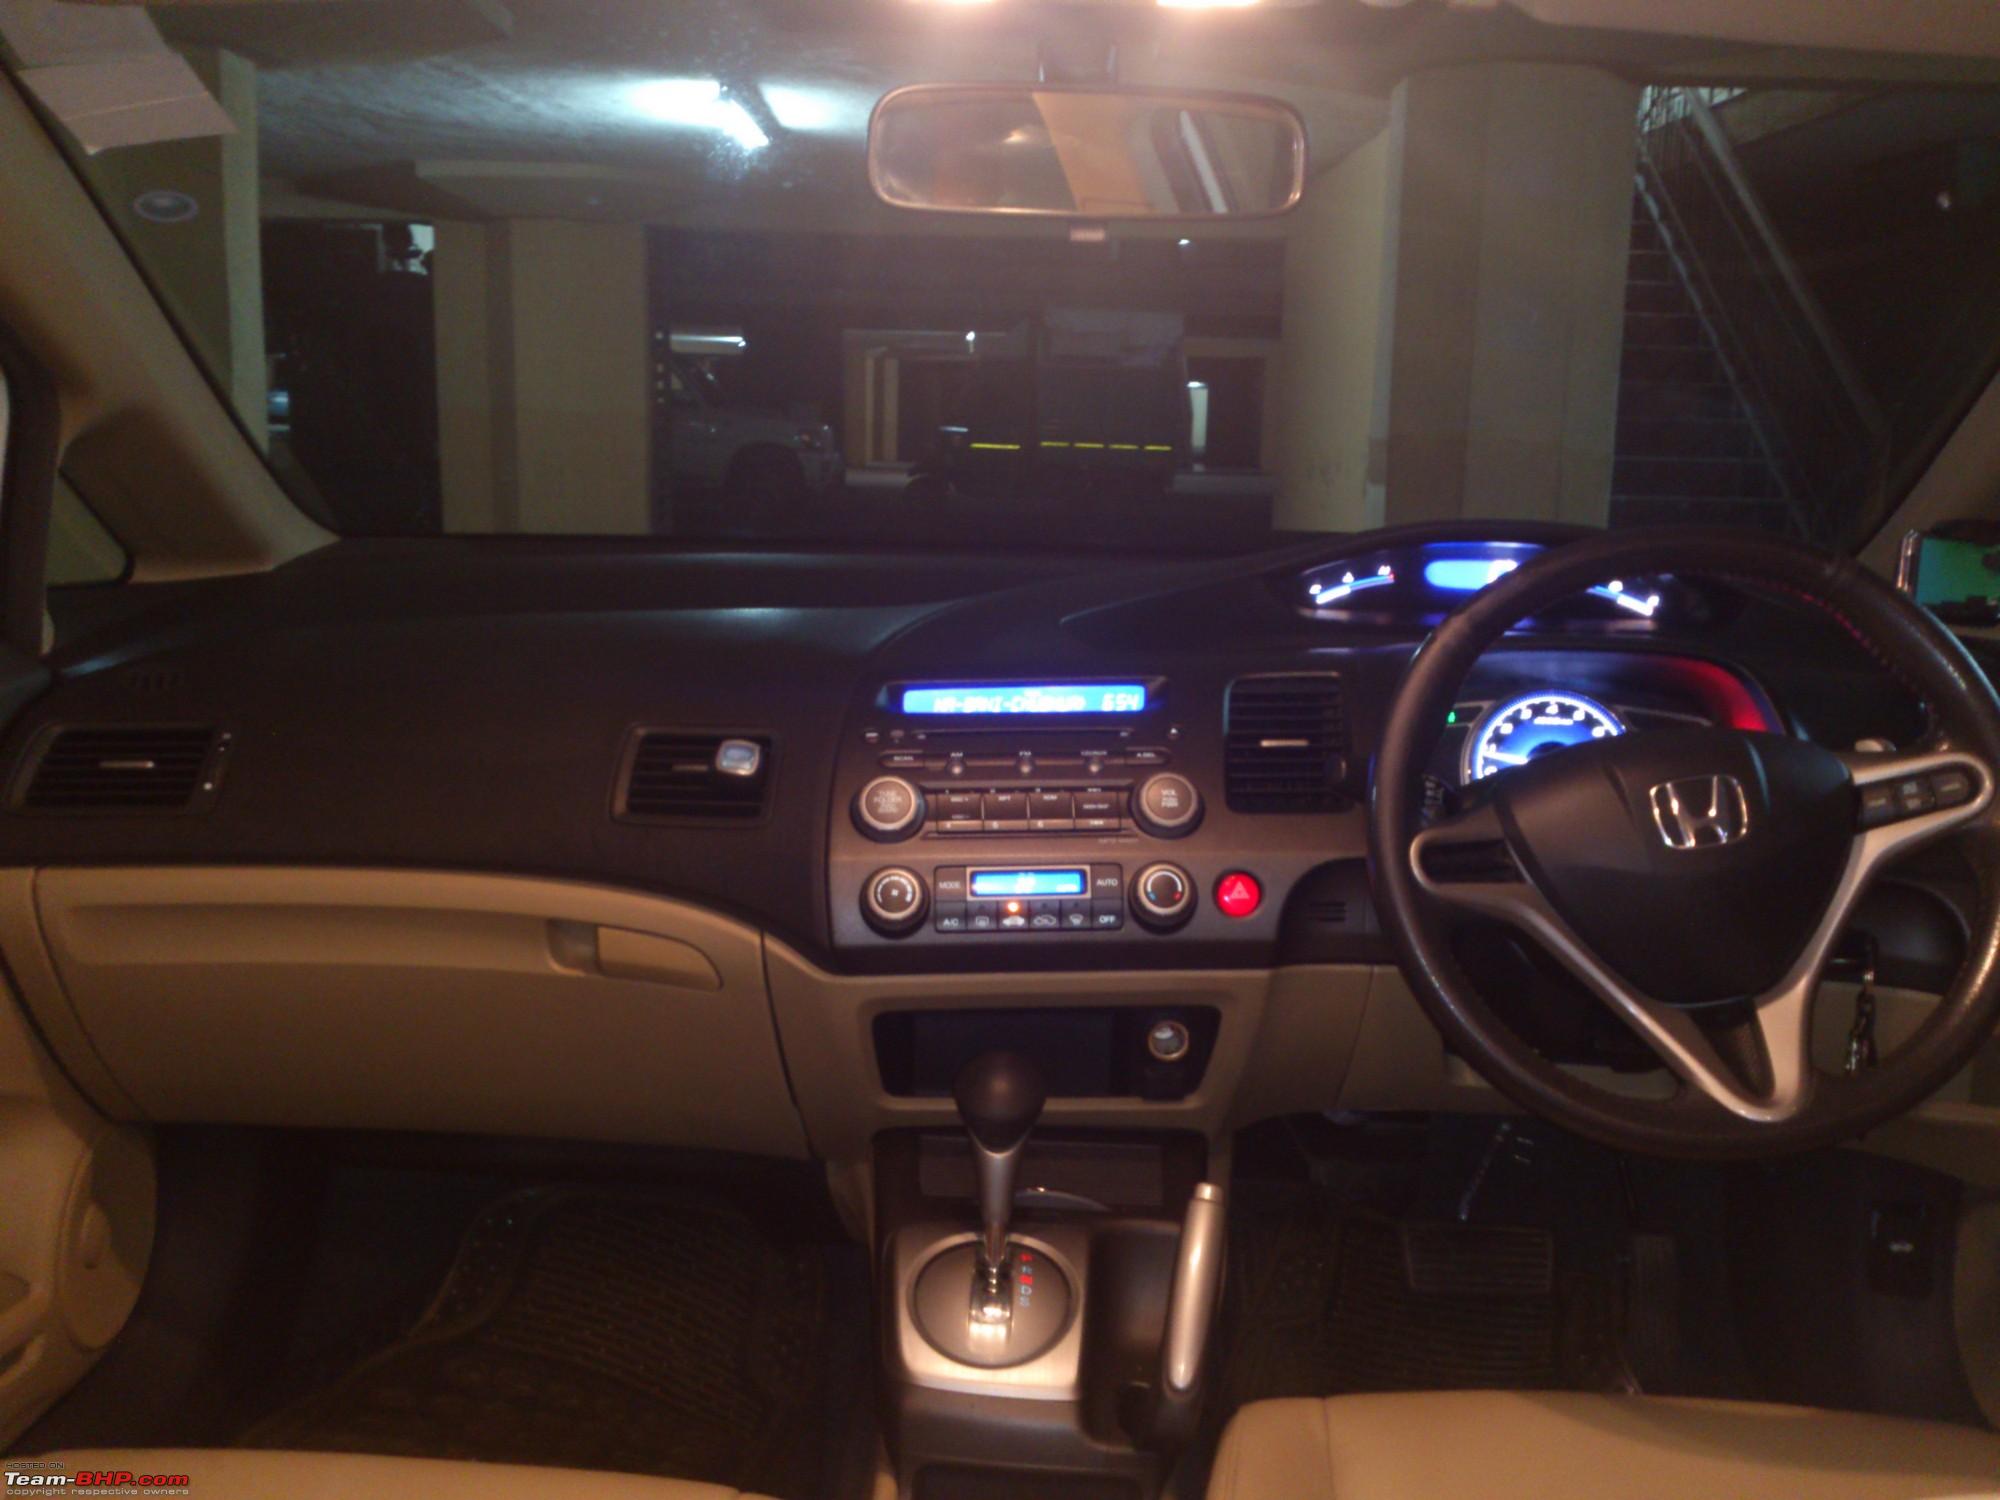 Honda Civic Honda Civic 2011 Interior India